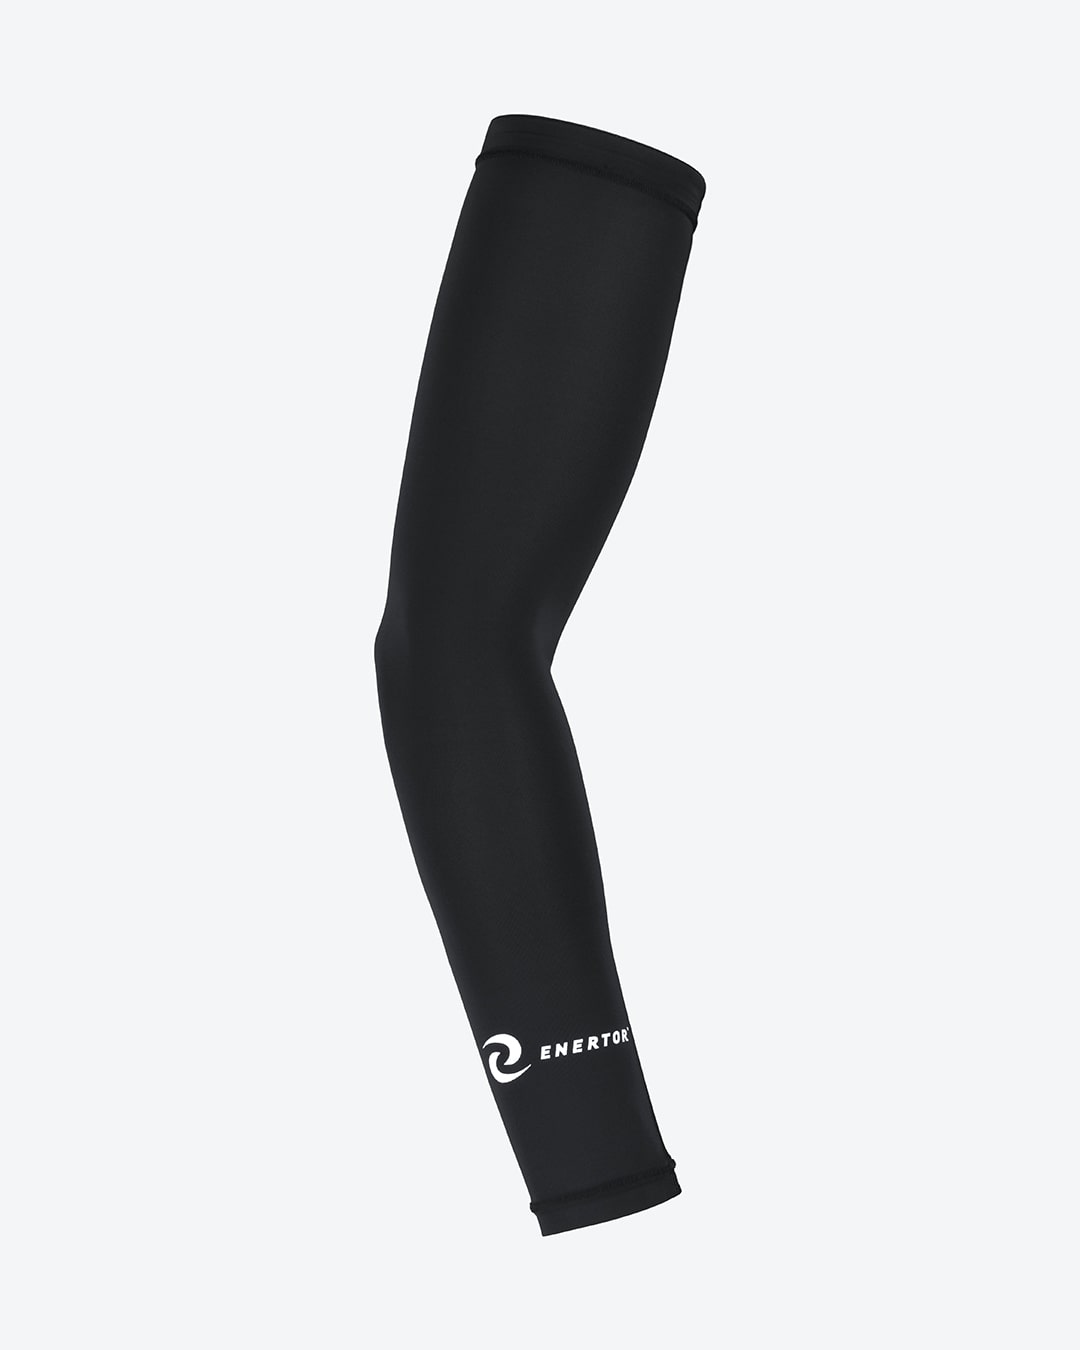 Enertor black arm sleeves with white logo print - Small to Medium 2